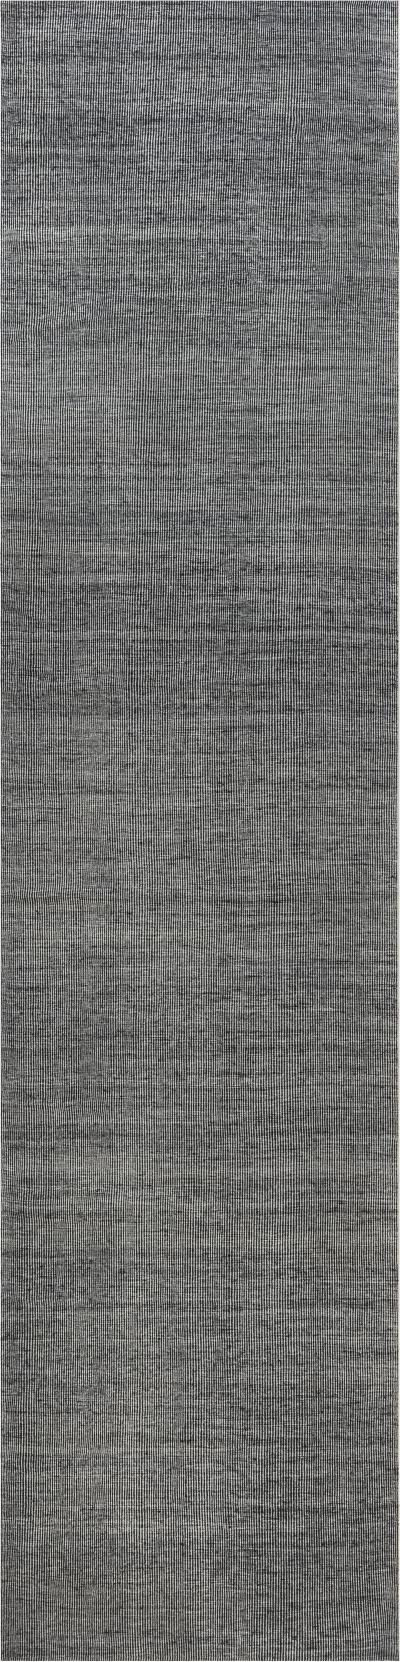 Doris Leslie Blau Collection Modern Black White Flat Weave Wool Runner